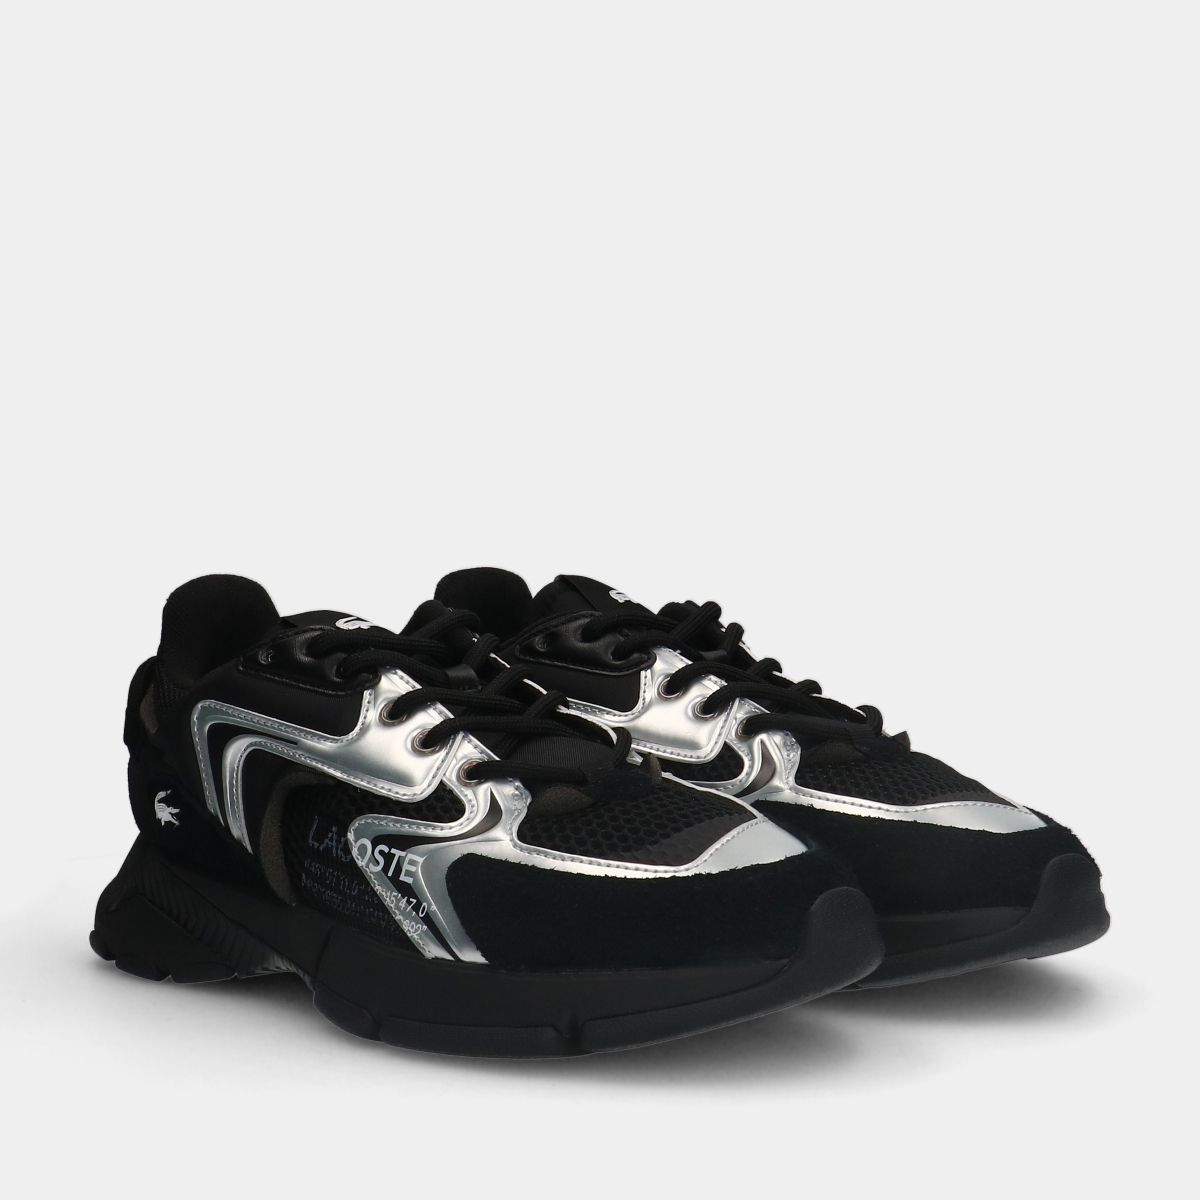 Lacoste L003 NEO Black/ White heren sneakers

